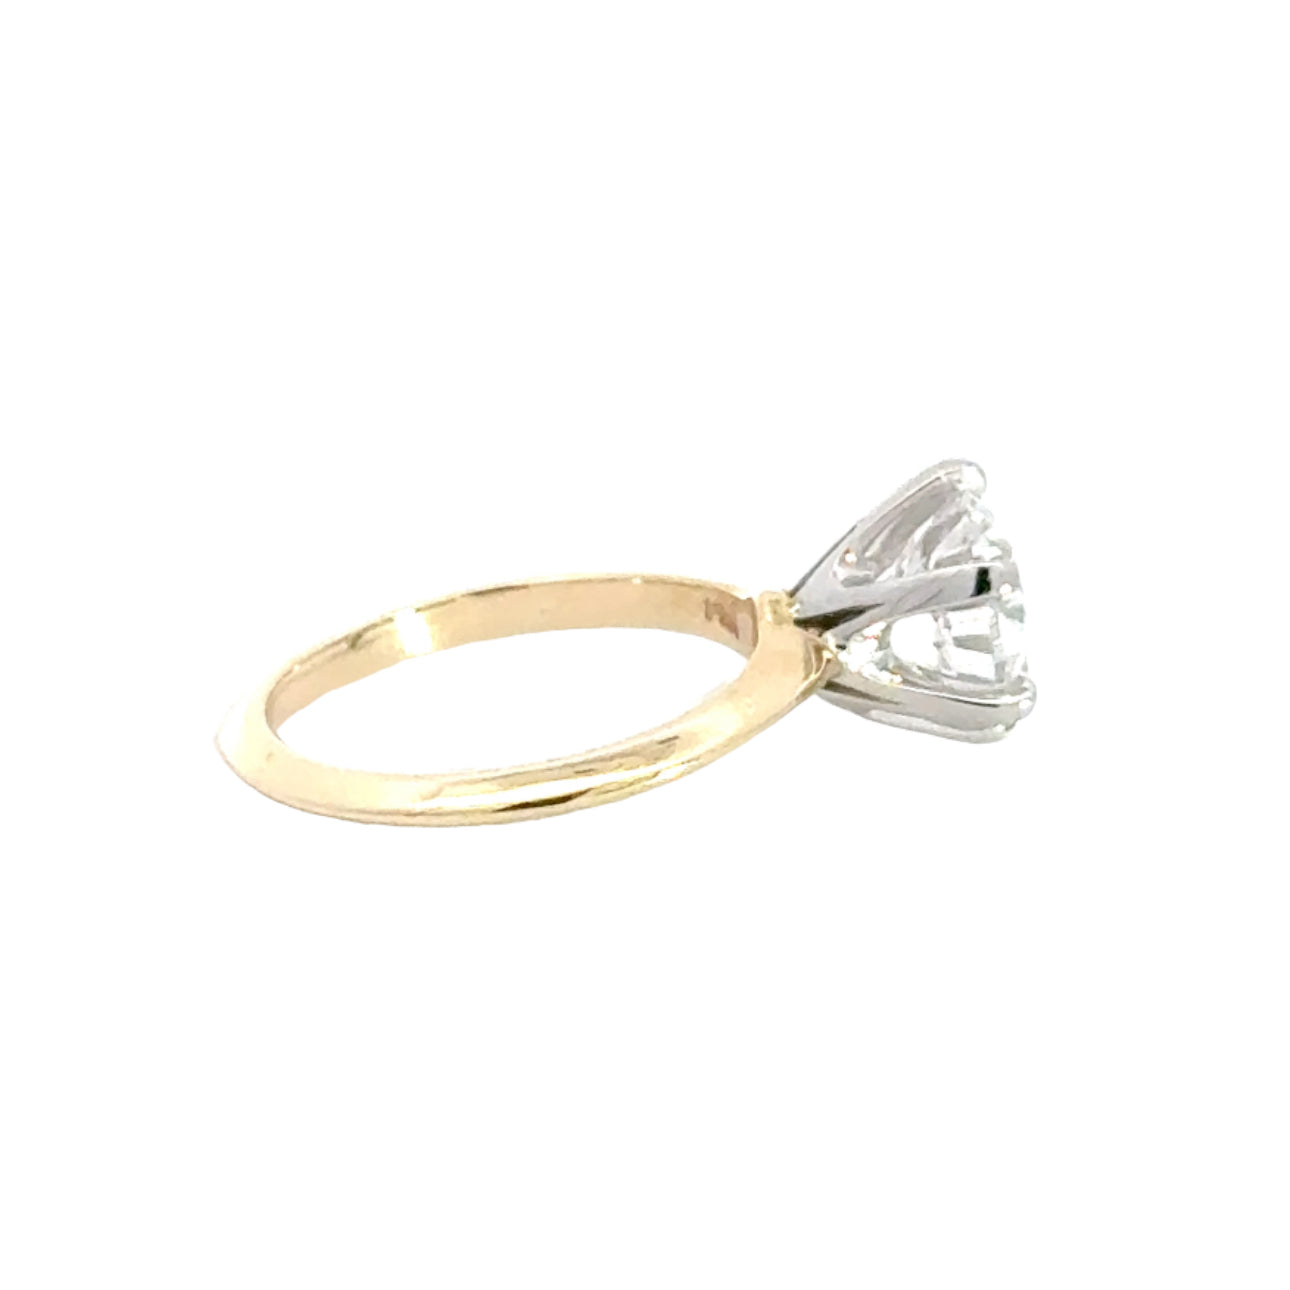 3 carat lab diamond engagement ring